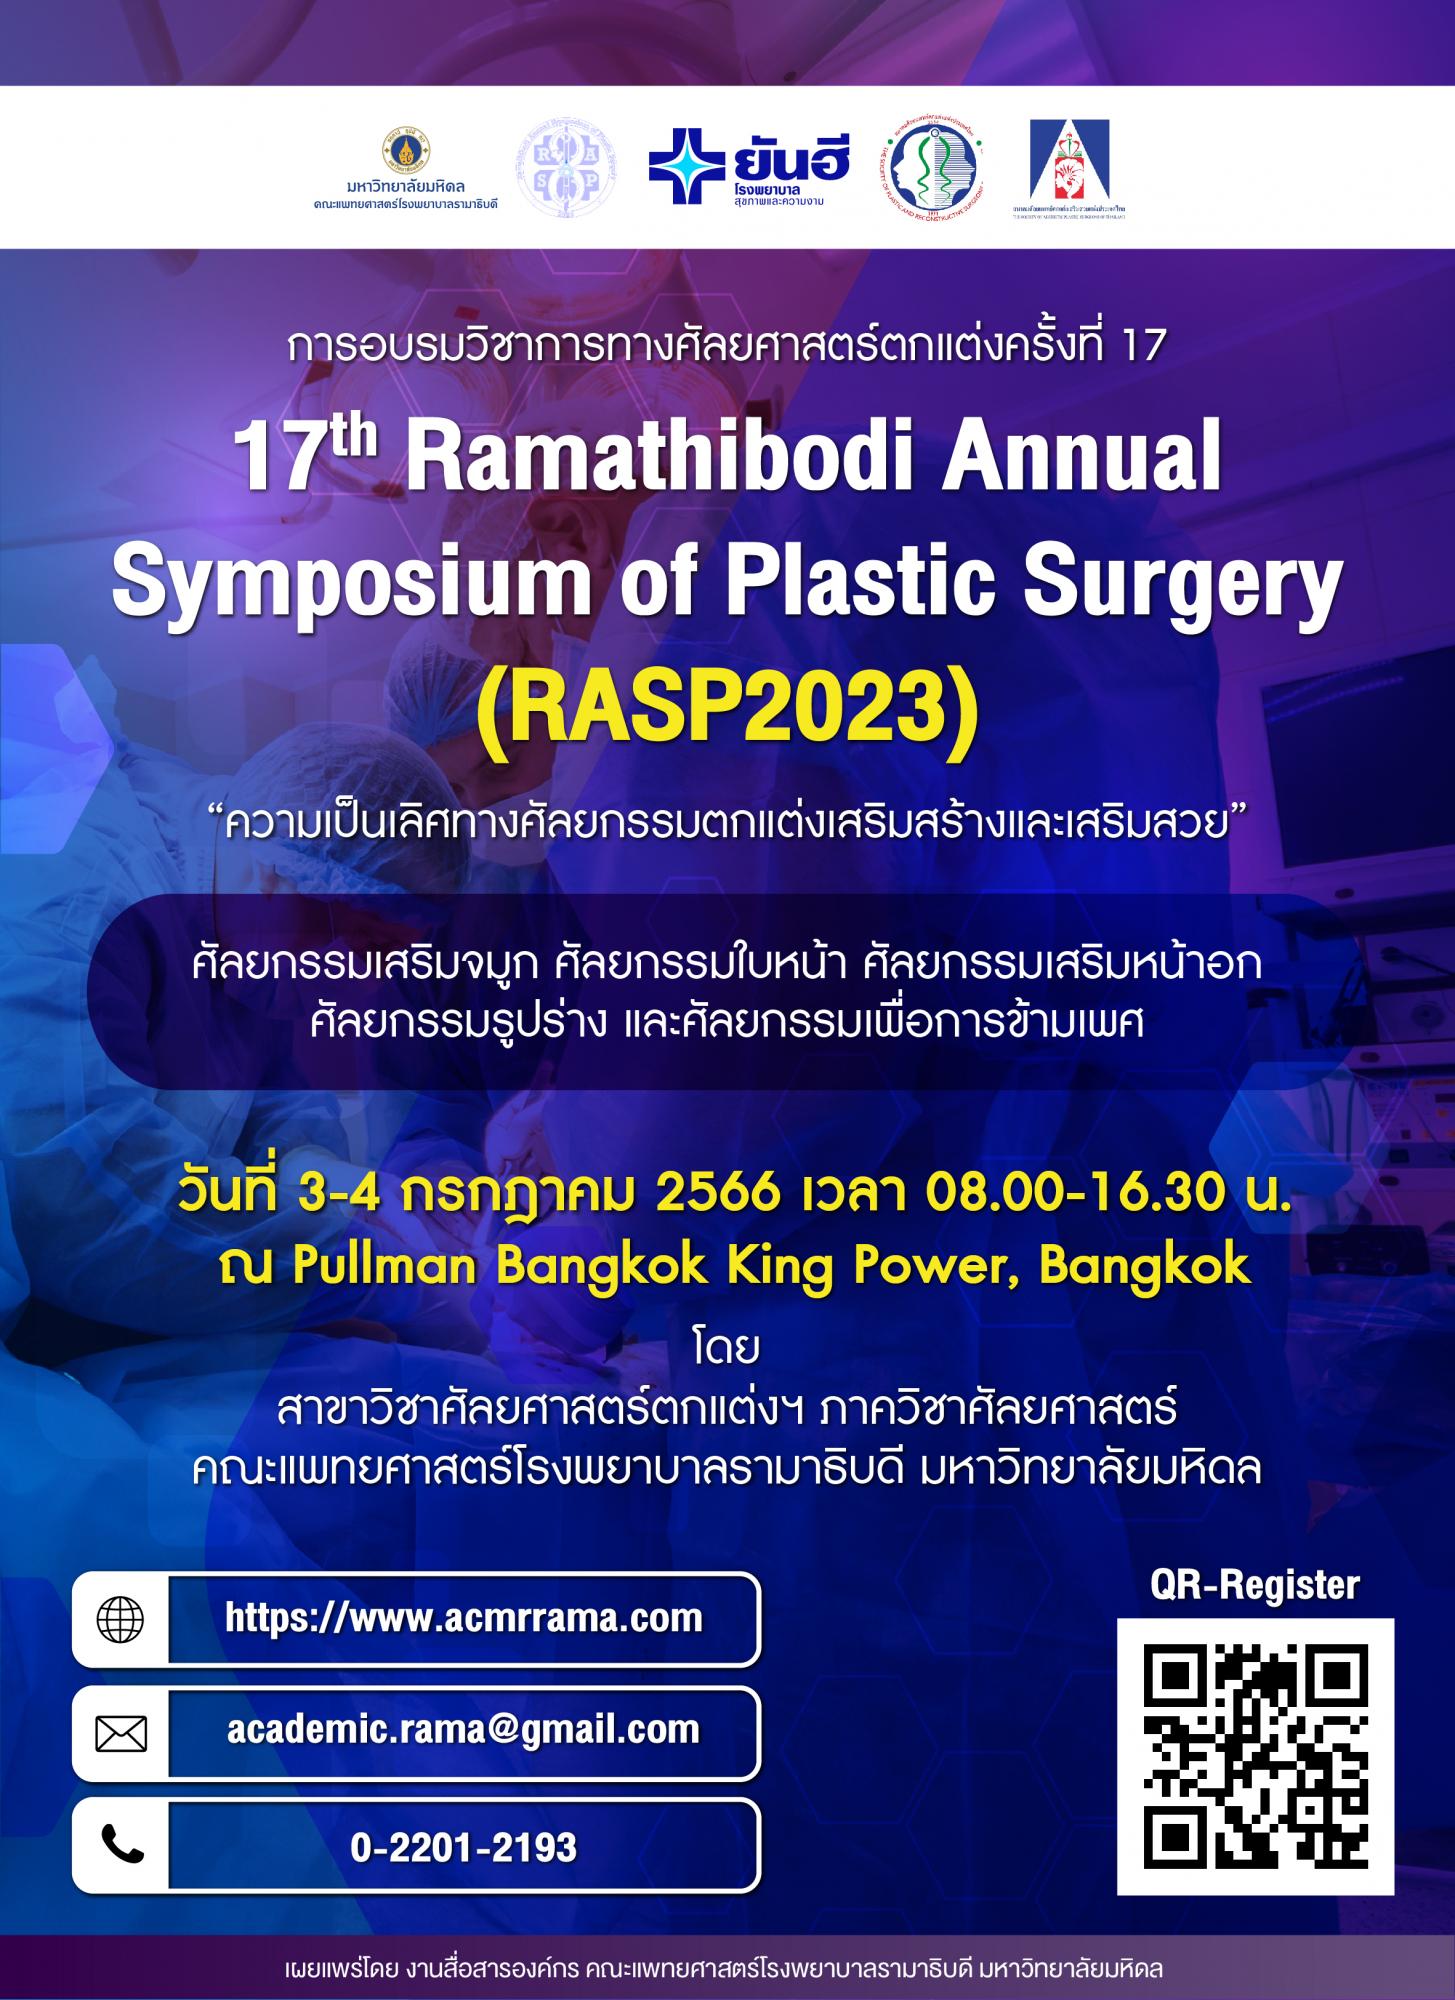 17th Ramathibodi Annual Symposium of Plastic Surgery